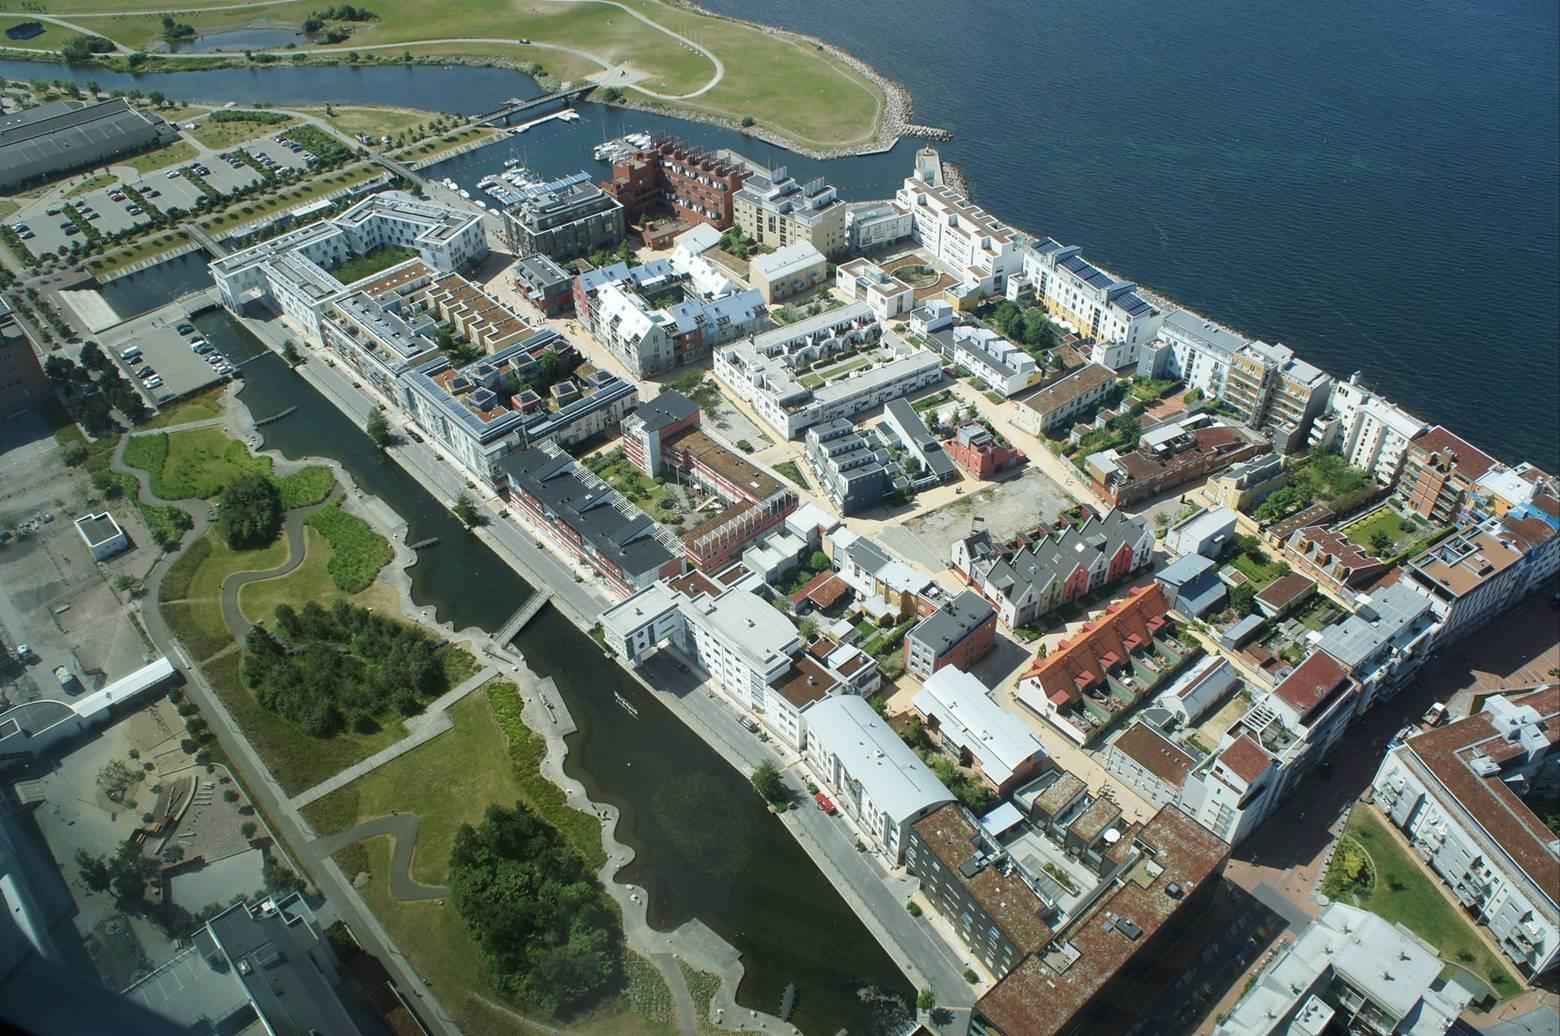 Befolkningsprognose og fortetting forts. Västra Hamnen, Malmø, Sverige. Bustadområde med 5,4 bustader per dekar. Varierte bustadtypar på same areal.